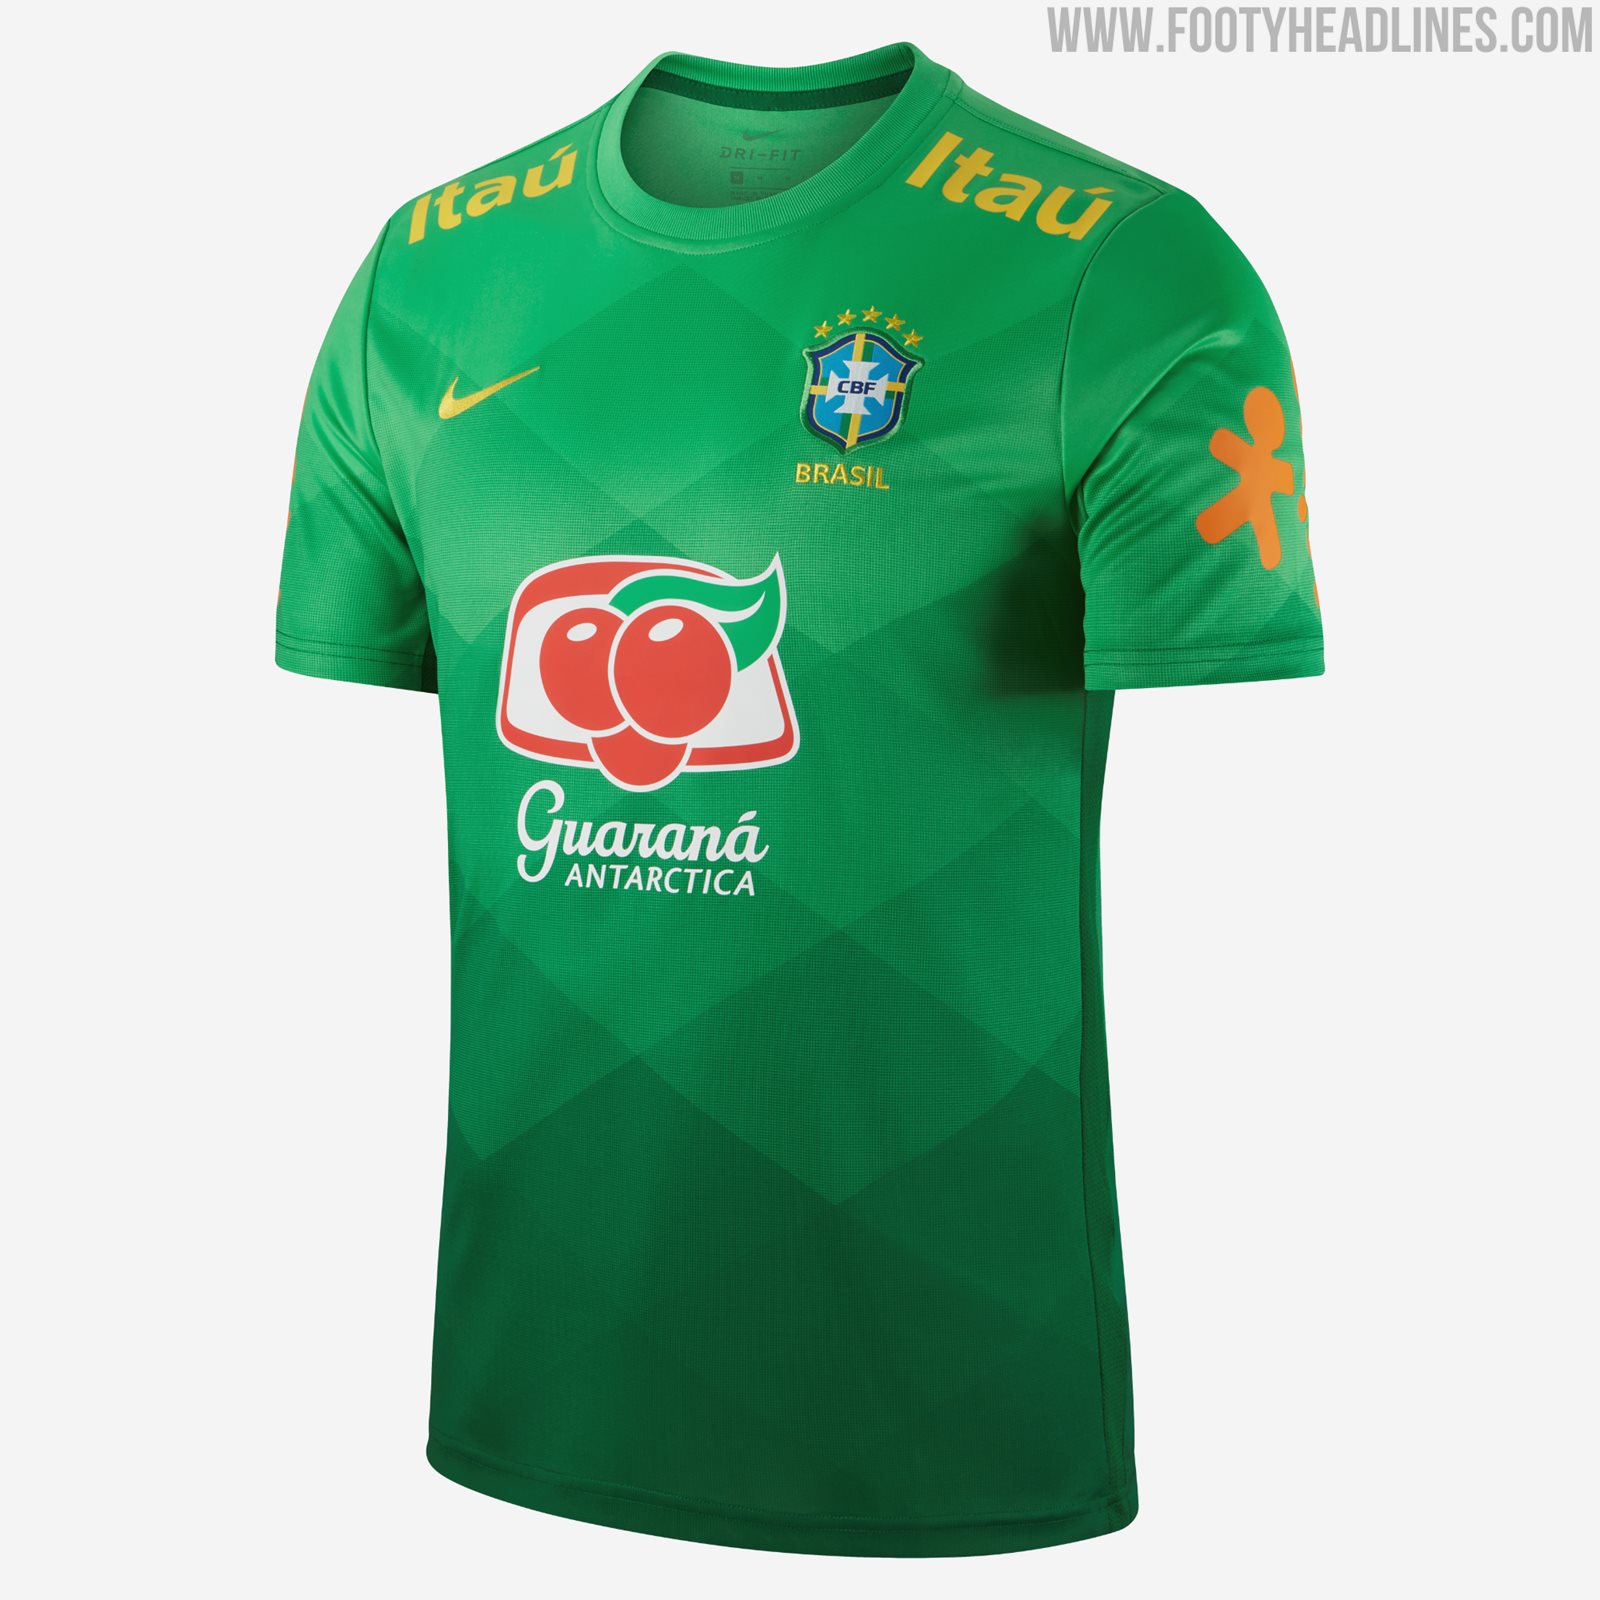 Brazil 2020 Pre-Match Shirt Released - Footy Headlines